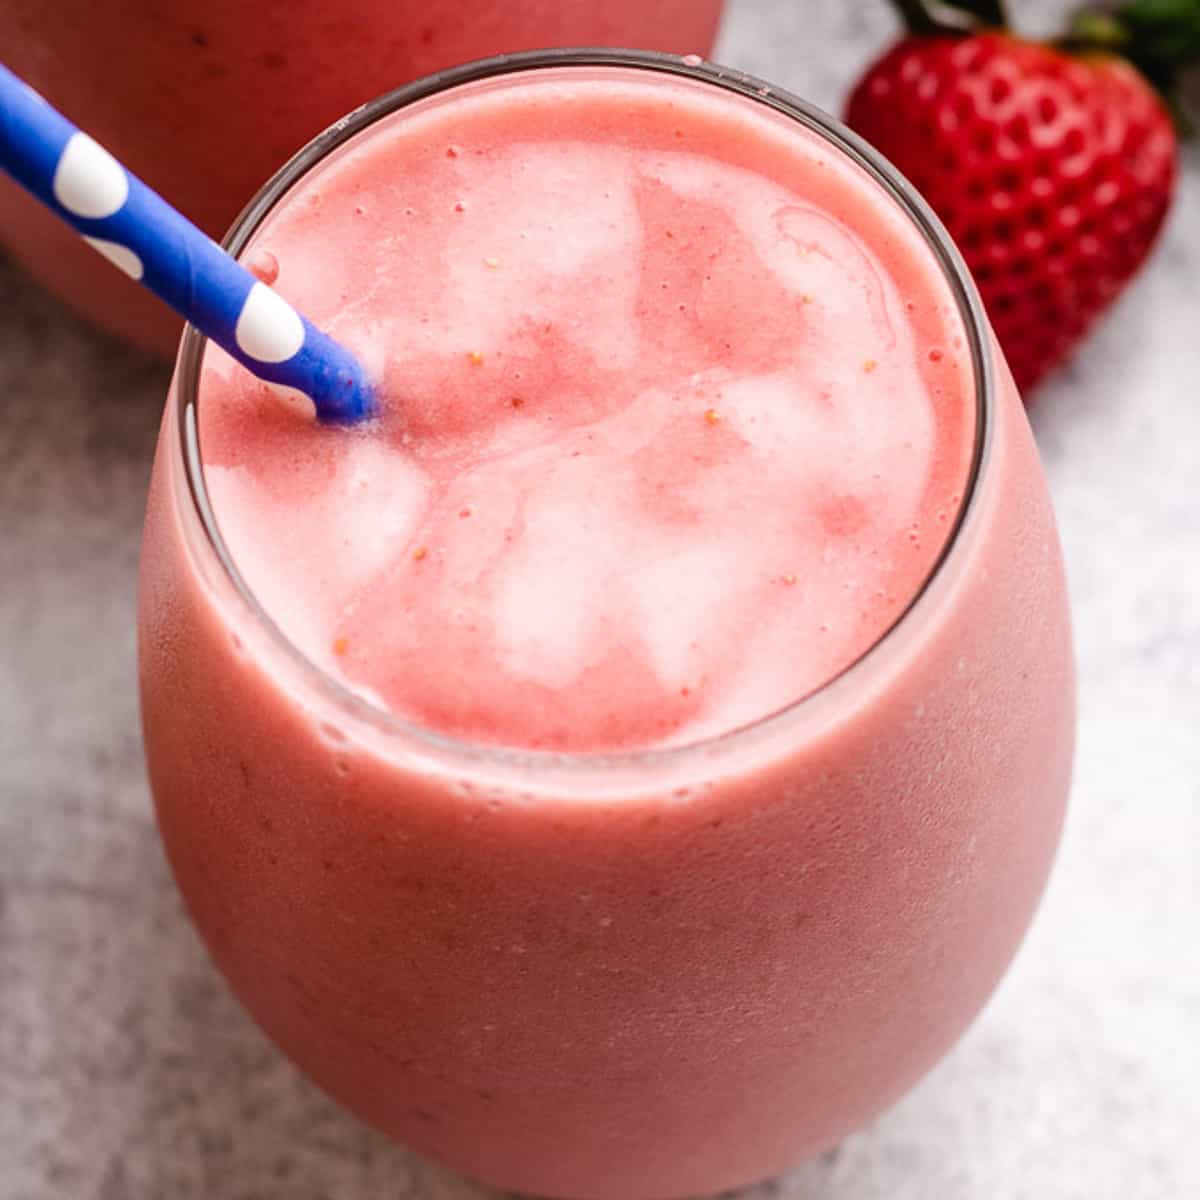 Strawberry pineapple smoothie